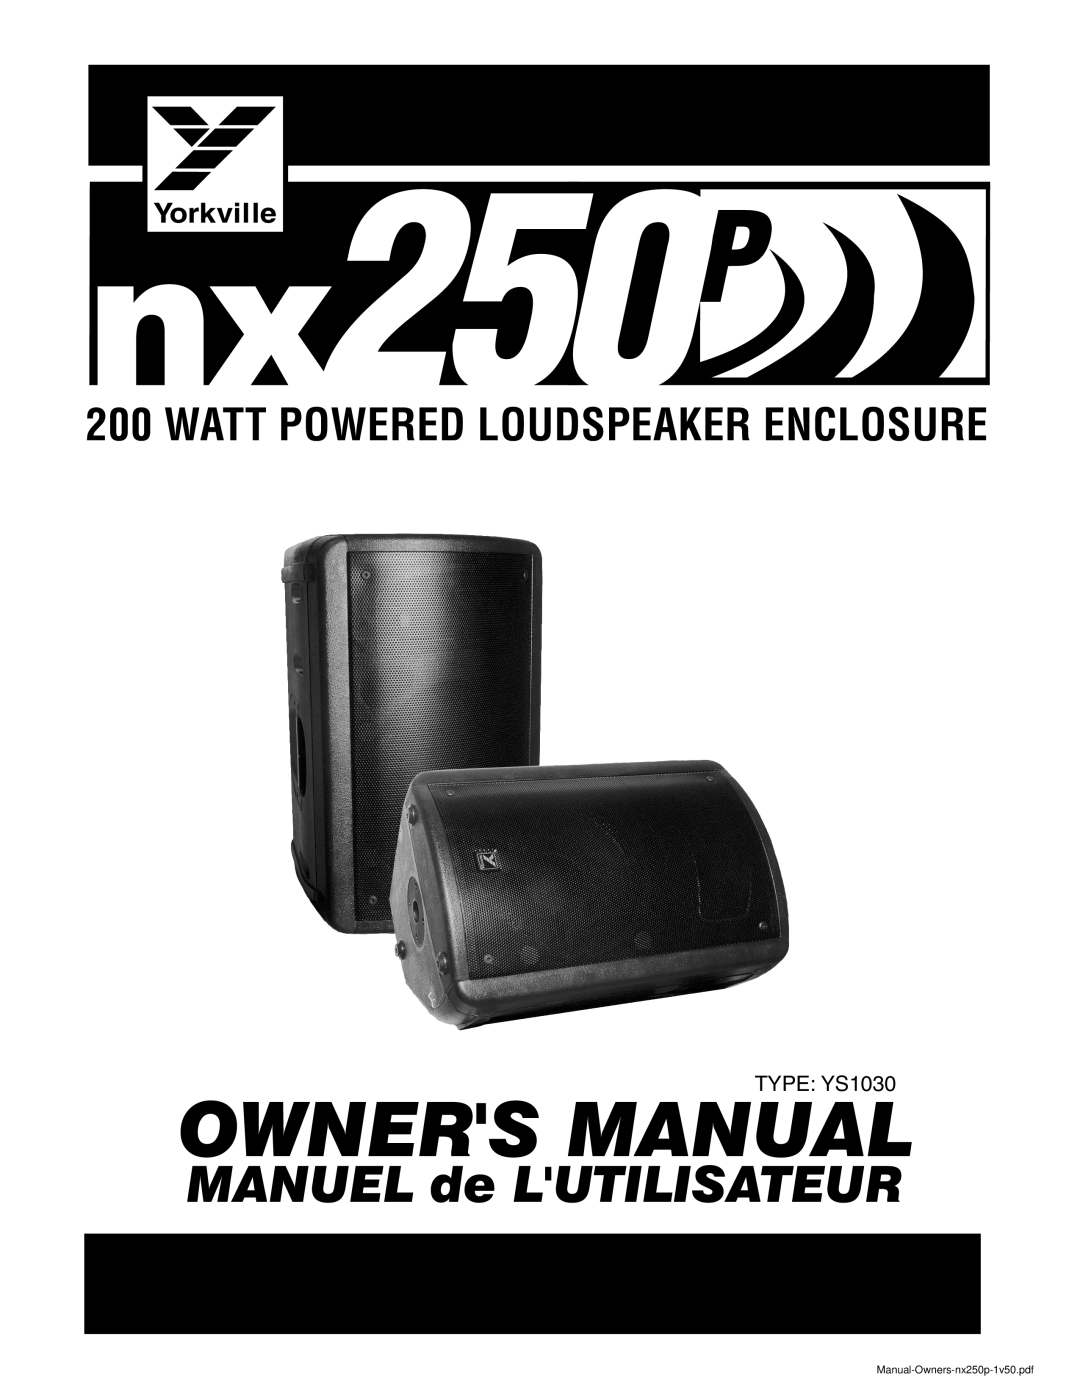 Yorkville Sound YS1030 owner manual Watt Powered Loudspeaker Enclosure, 250P, MANUEL de LUTILISATEUR, Yorkville 